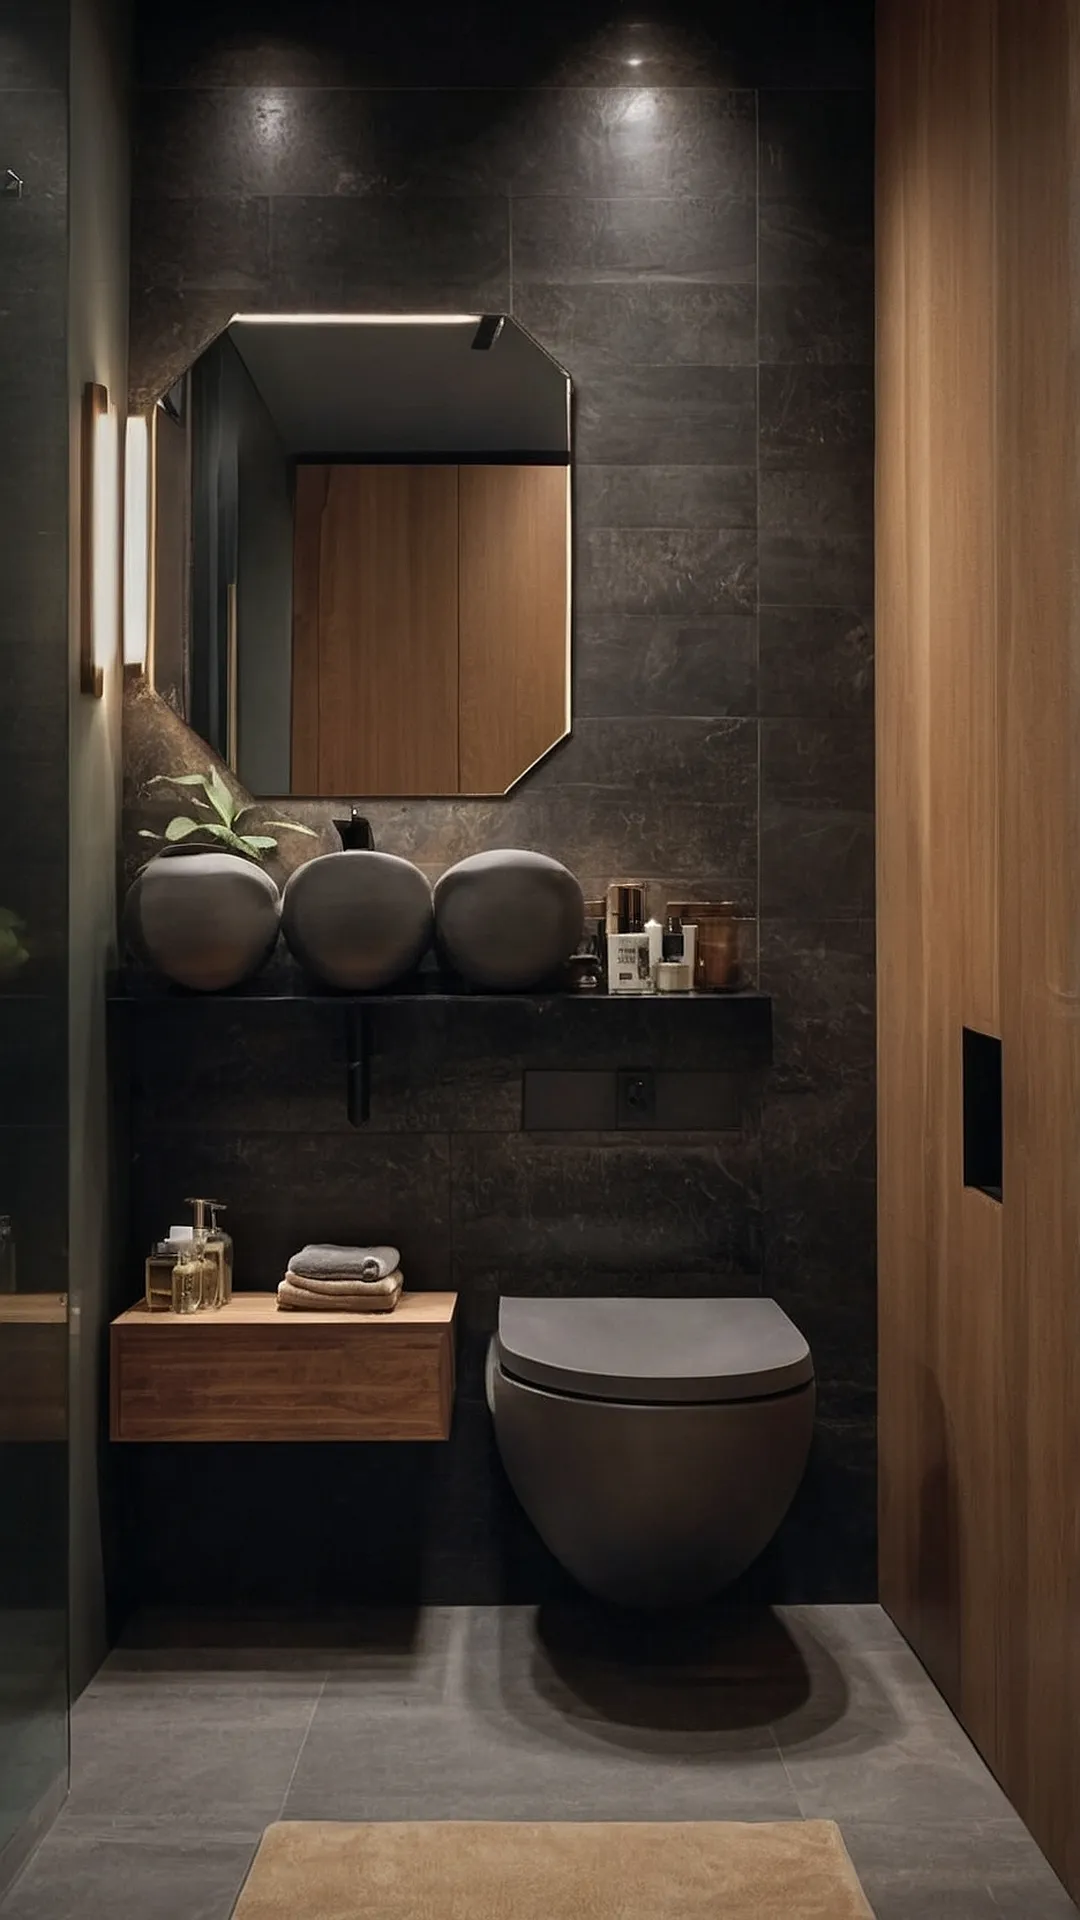 Sleek and Modern: Contemporary Bathroom Designs